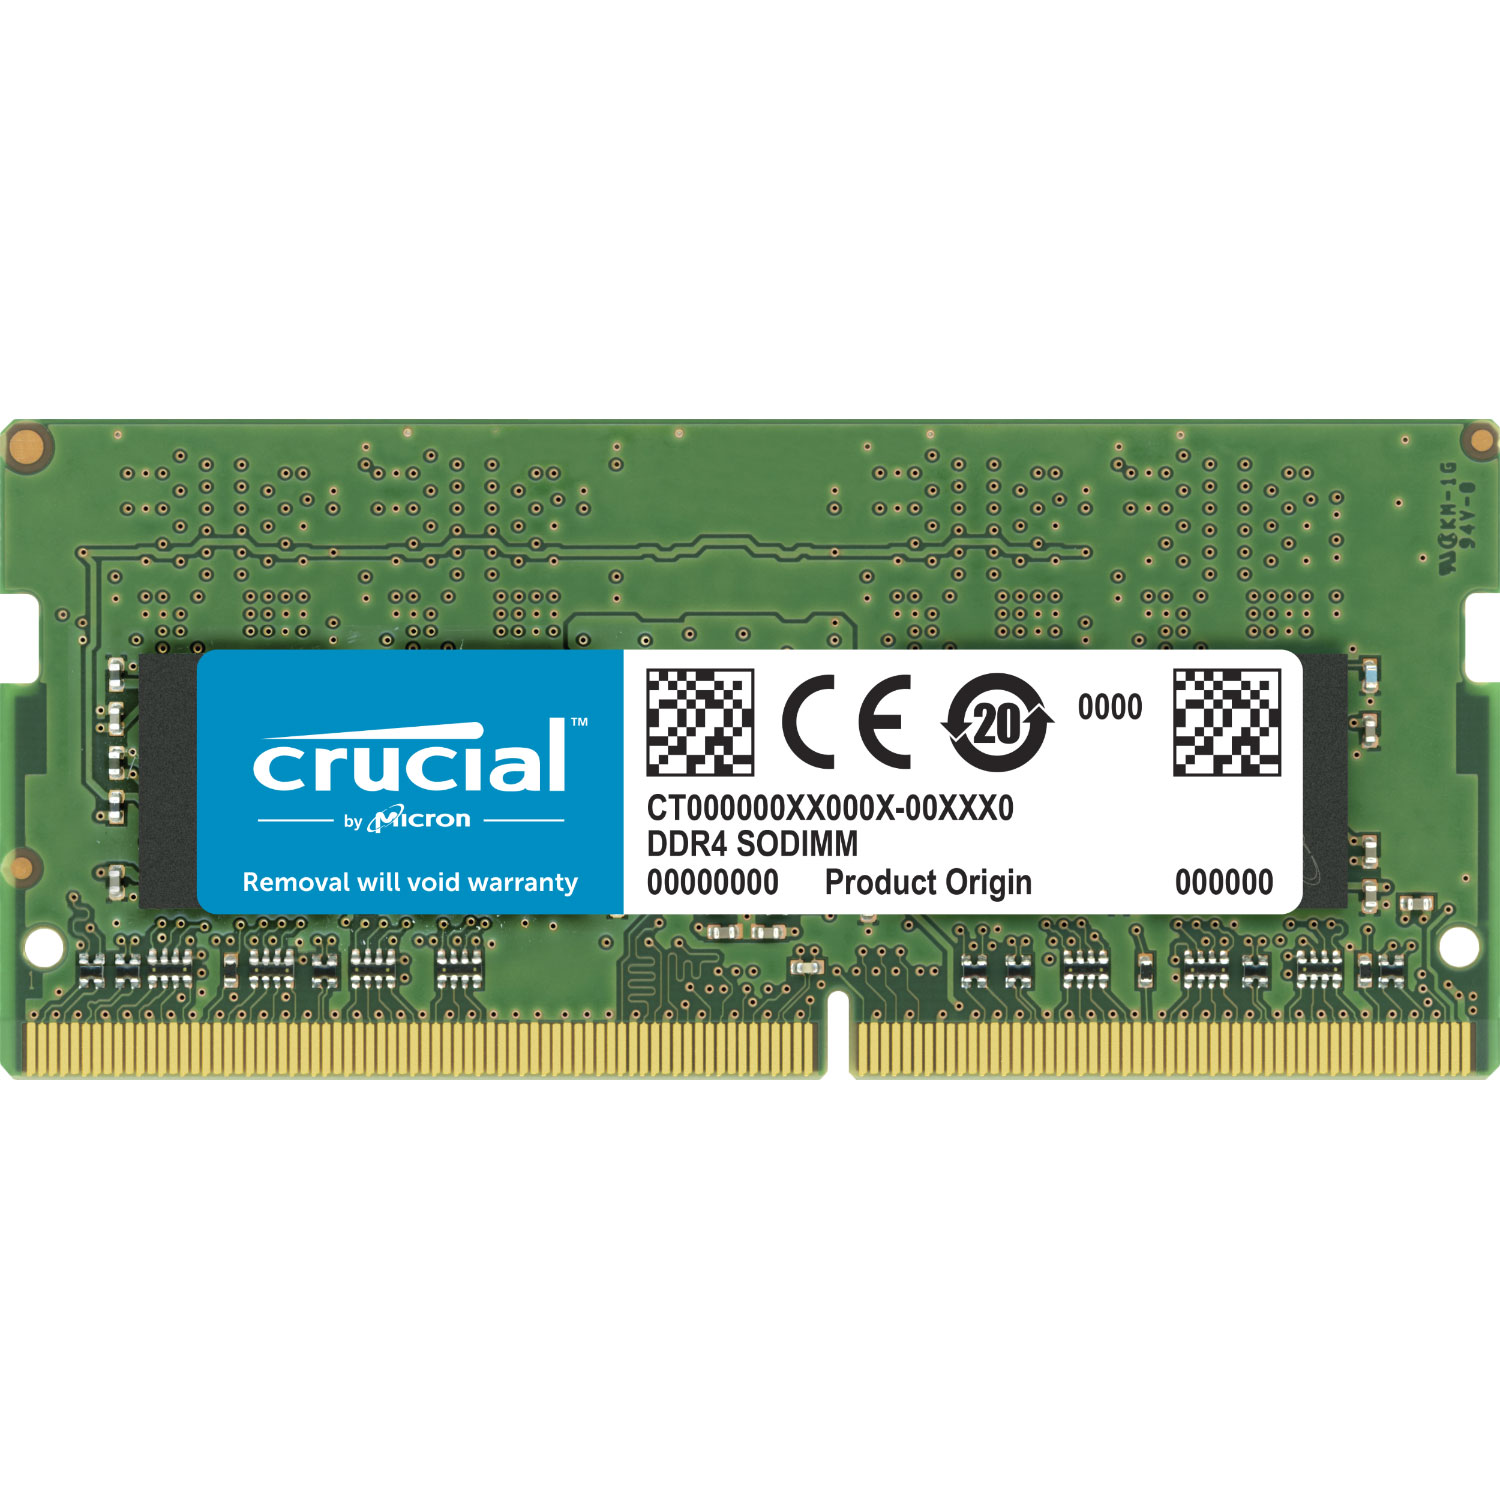 Mmoire So-Dimm Crucial DDR4 8Go PC25600 3200 MHz CL22, informatique Reunion 974, Futur Runion informatique